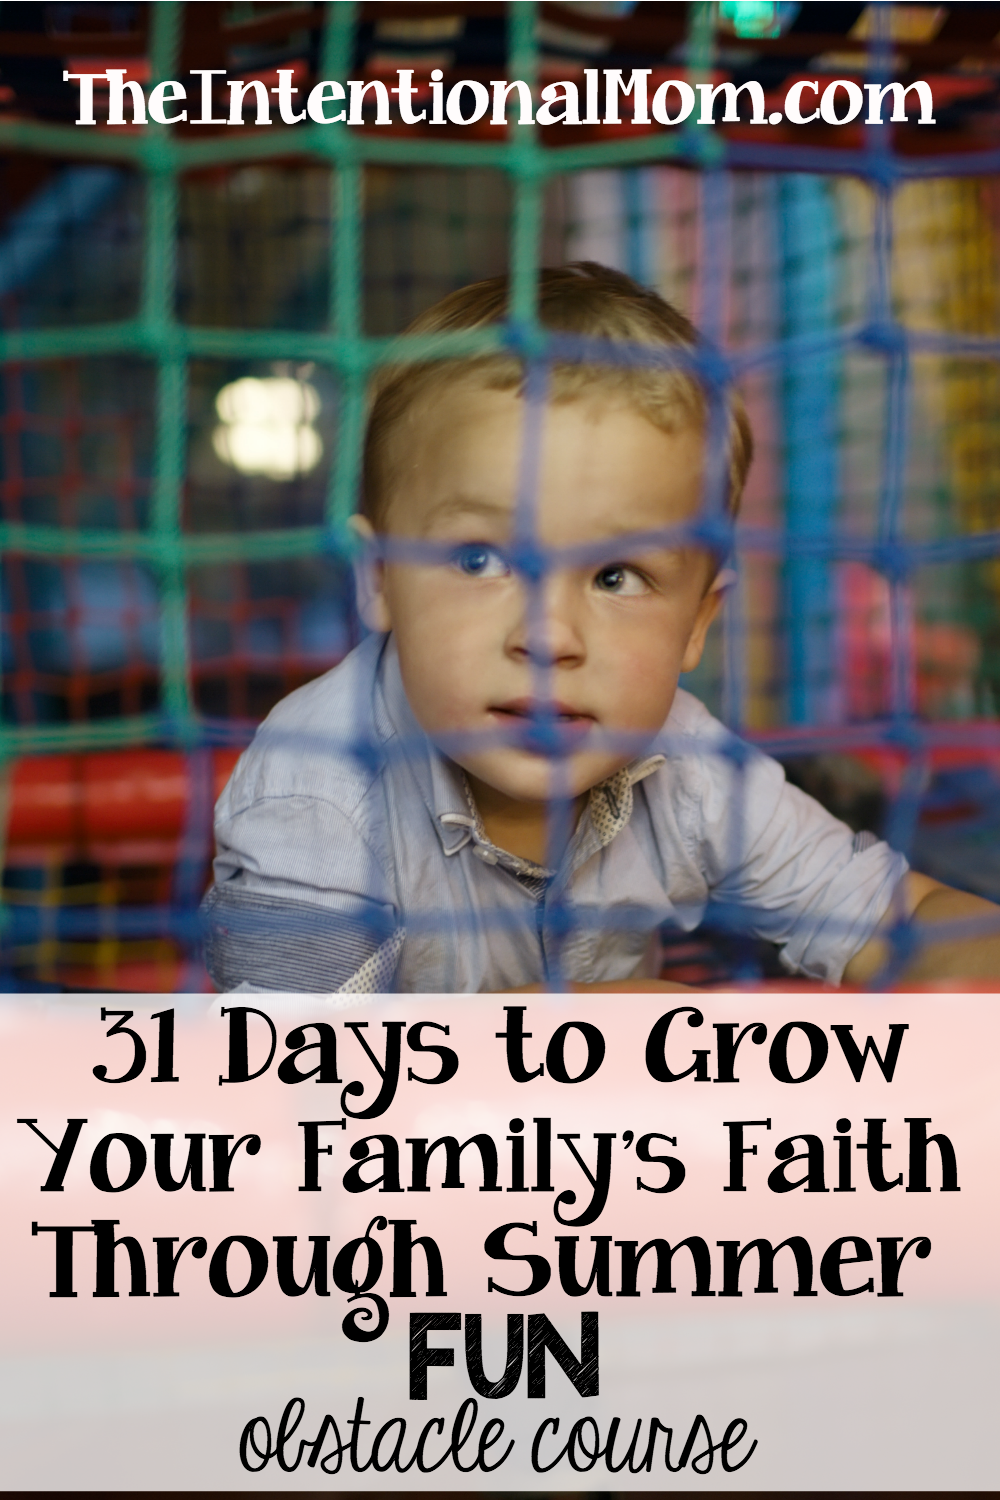 31 Ways to Grow Your Family’s Faith Through Summer Fun – Obstacle Course